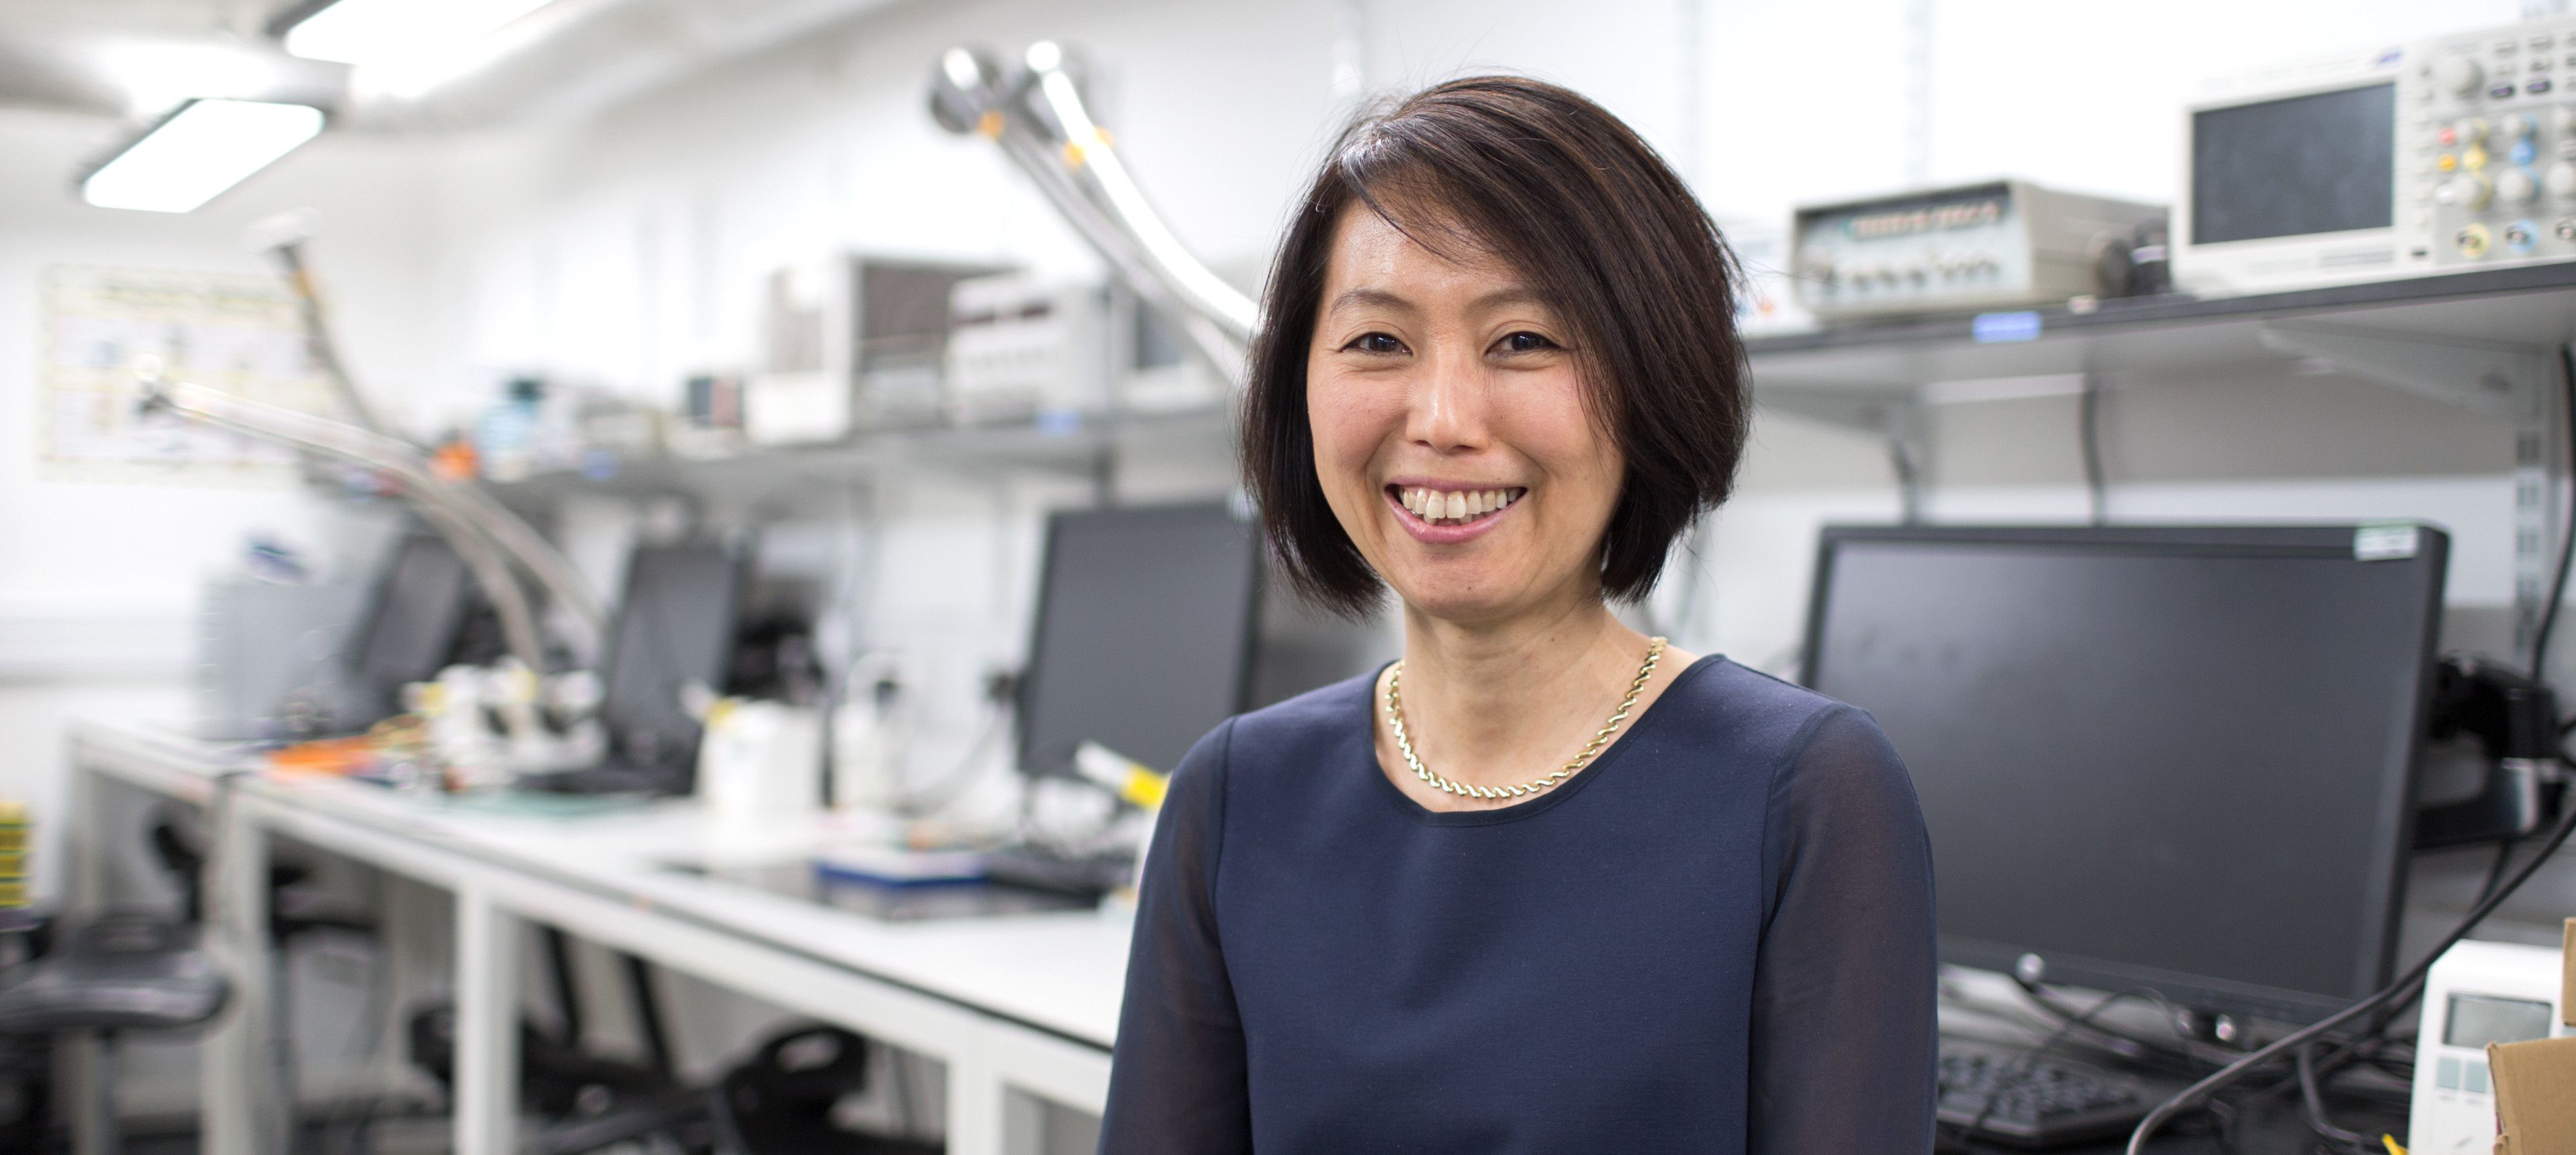 r Reiko Tanaka from Imperial's Department of Bioengineering